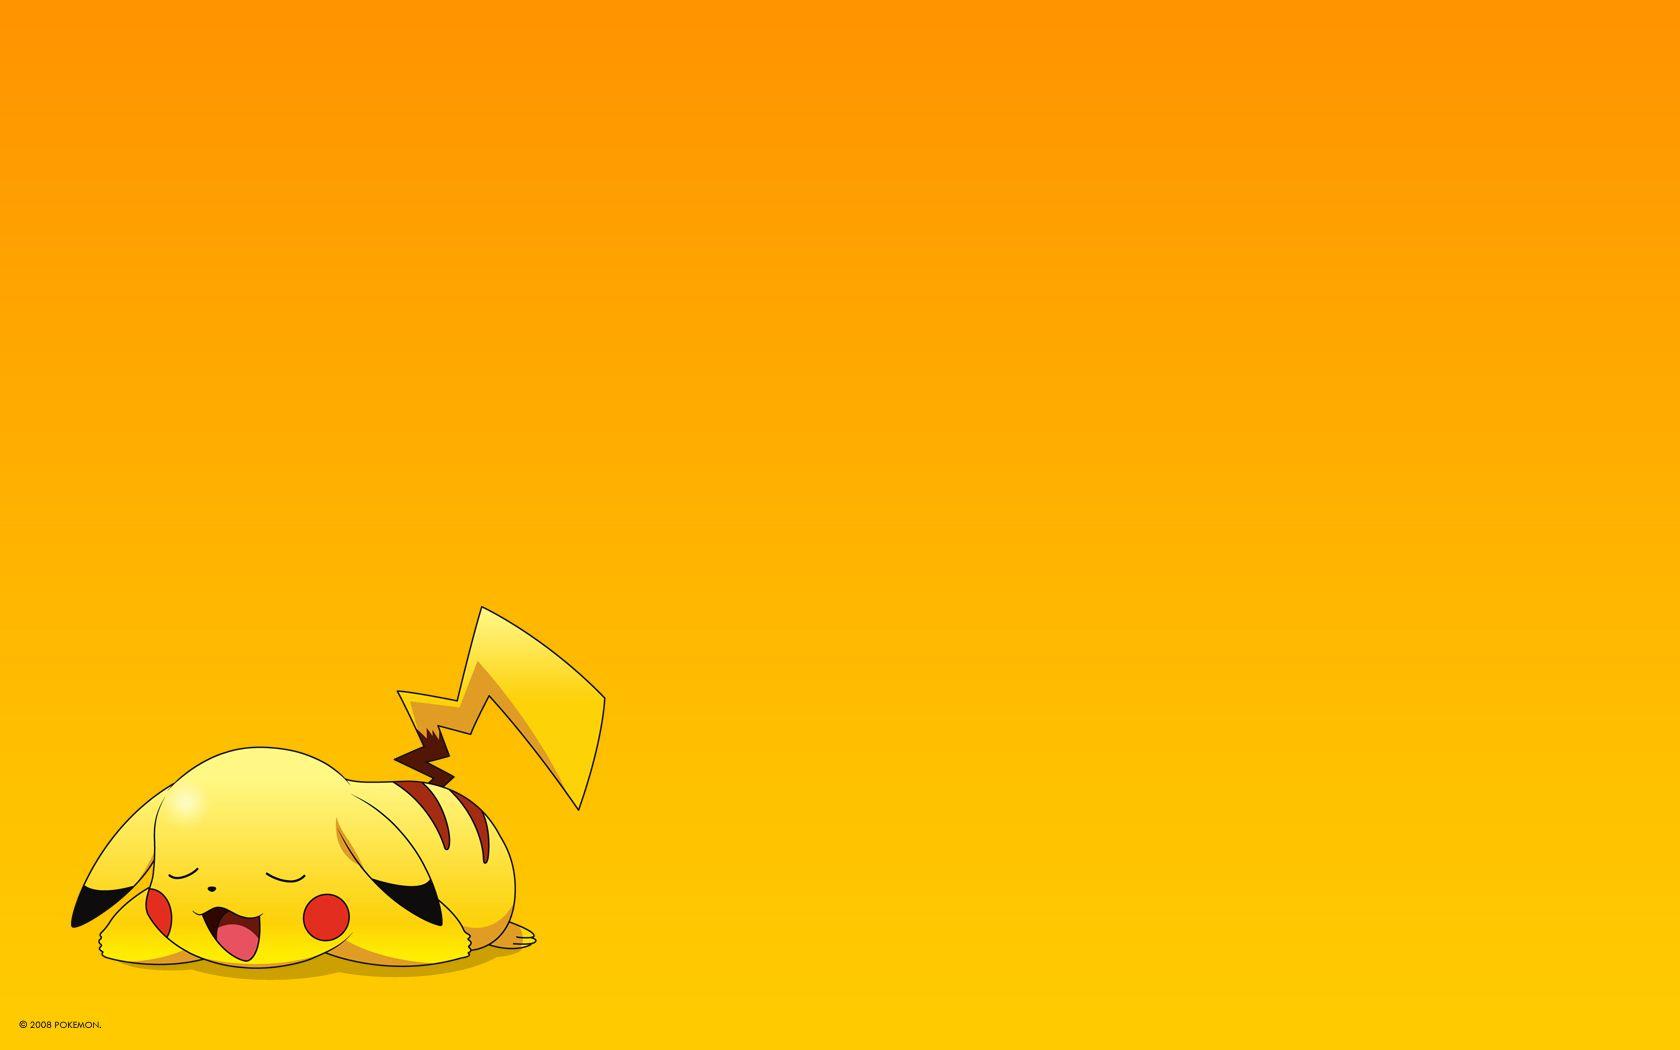 Pikachu HD Wallpaper. Pikachu wallpaper, Cartoon wallpaper hd, Cartoon wallpaper